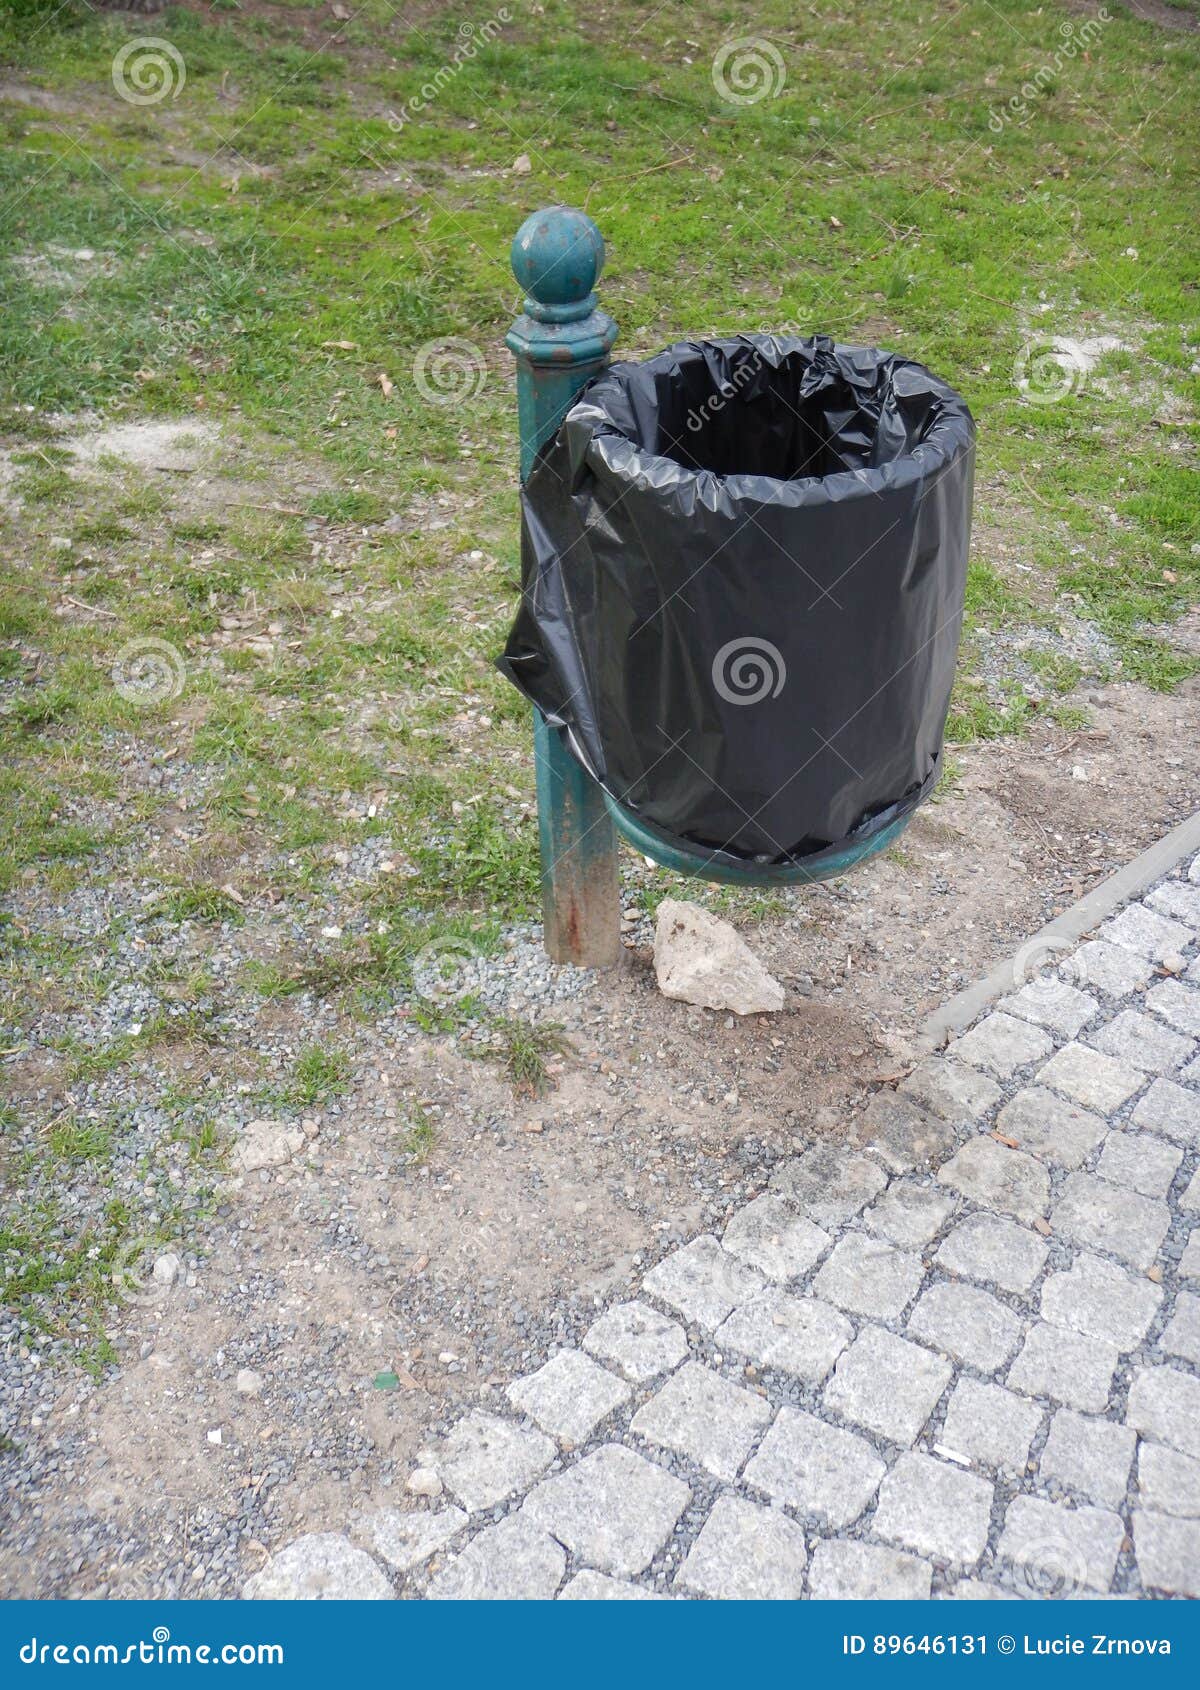 outdoor rubish bin in a park